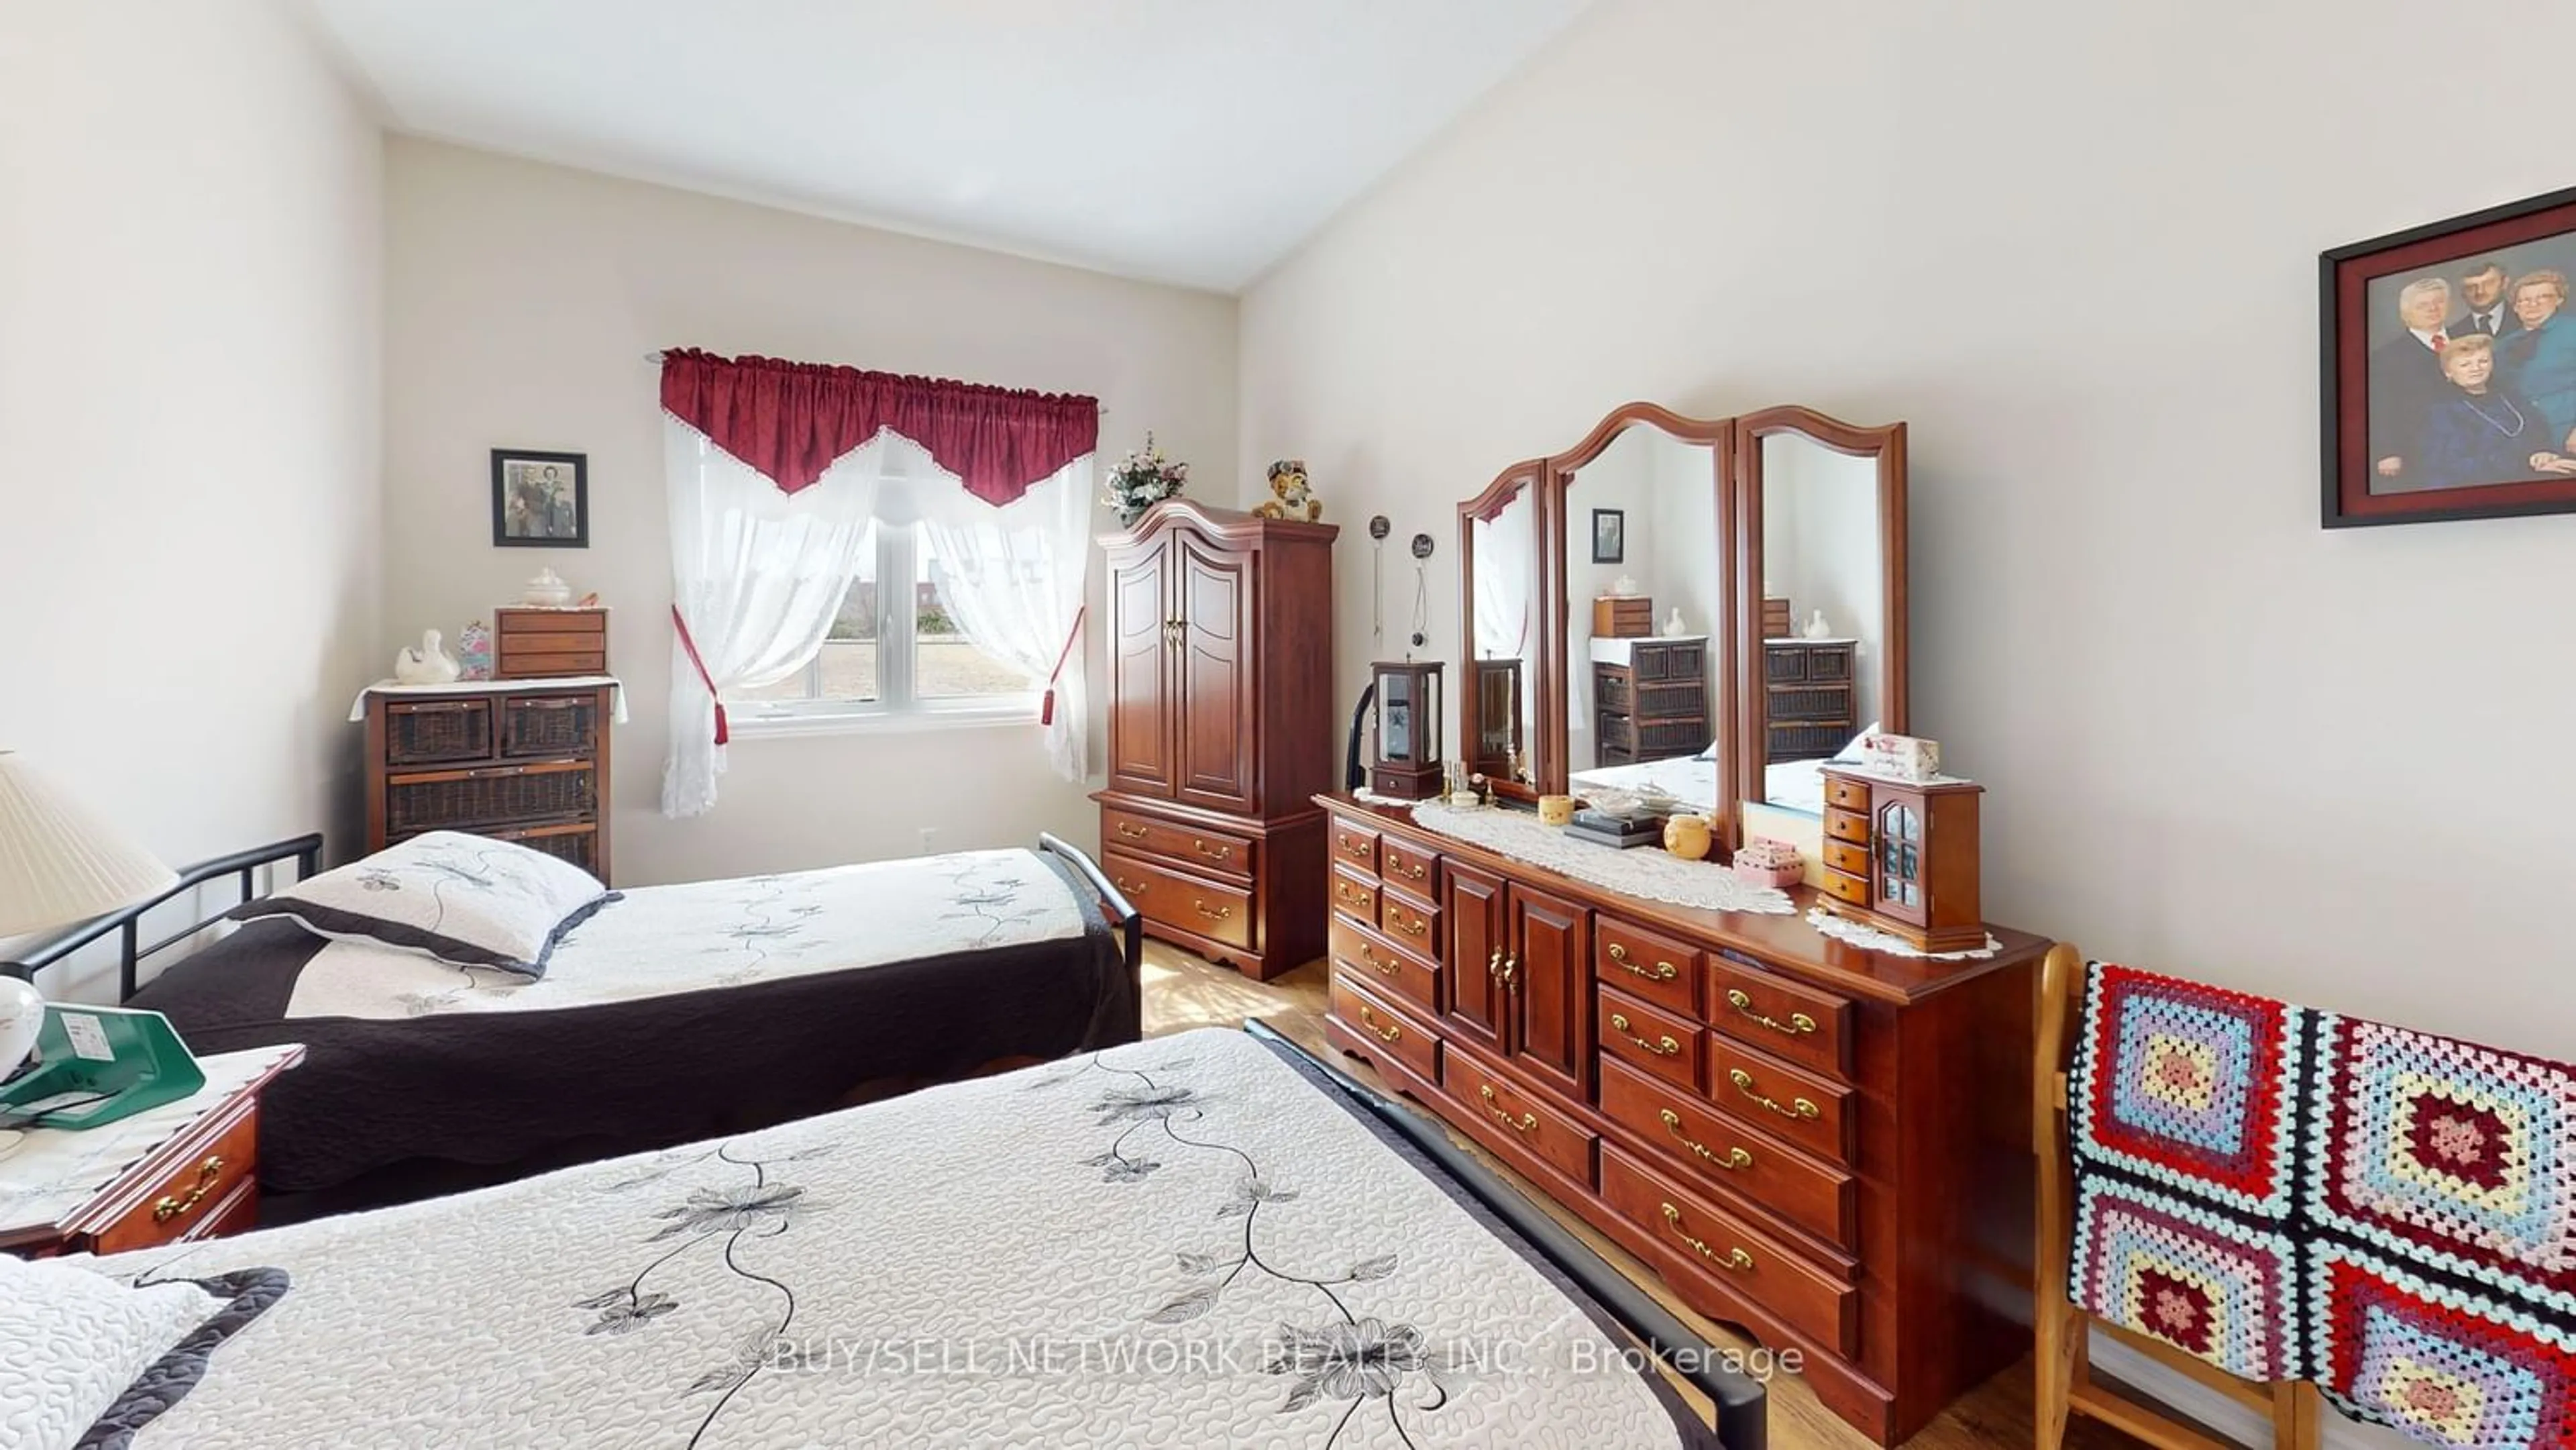 Bedroom for 39 Chadwin Dr, Kawartha Lakes Ontario K9V 0E8